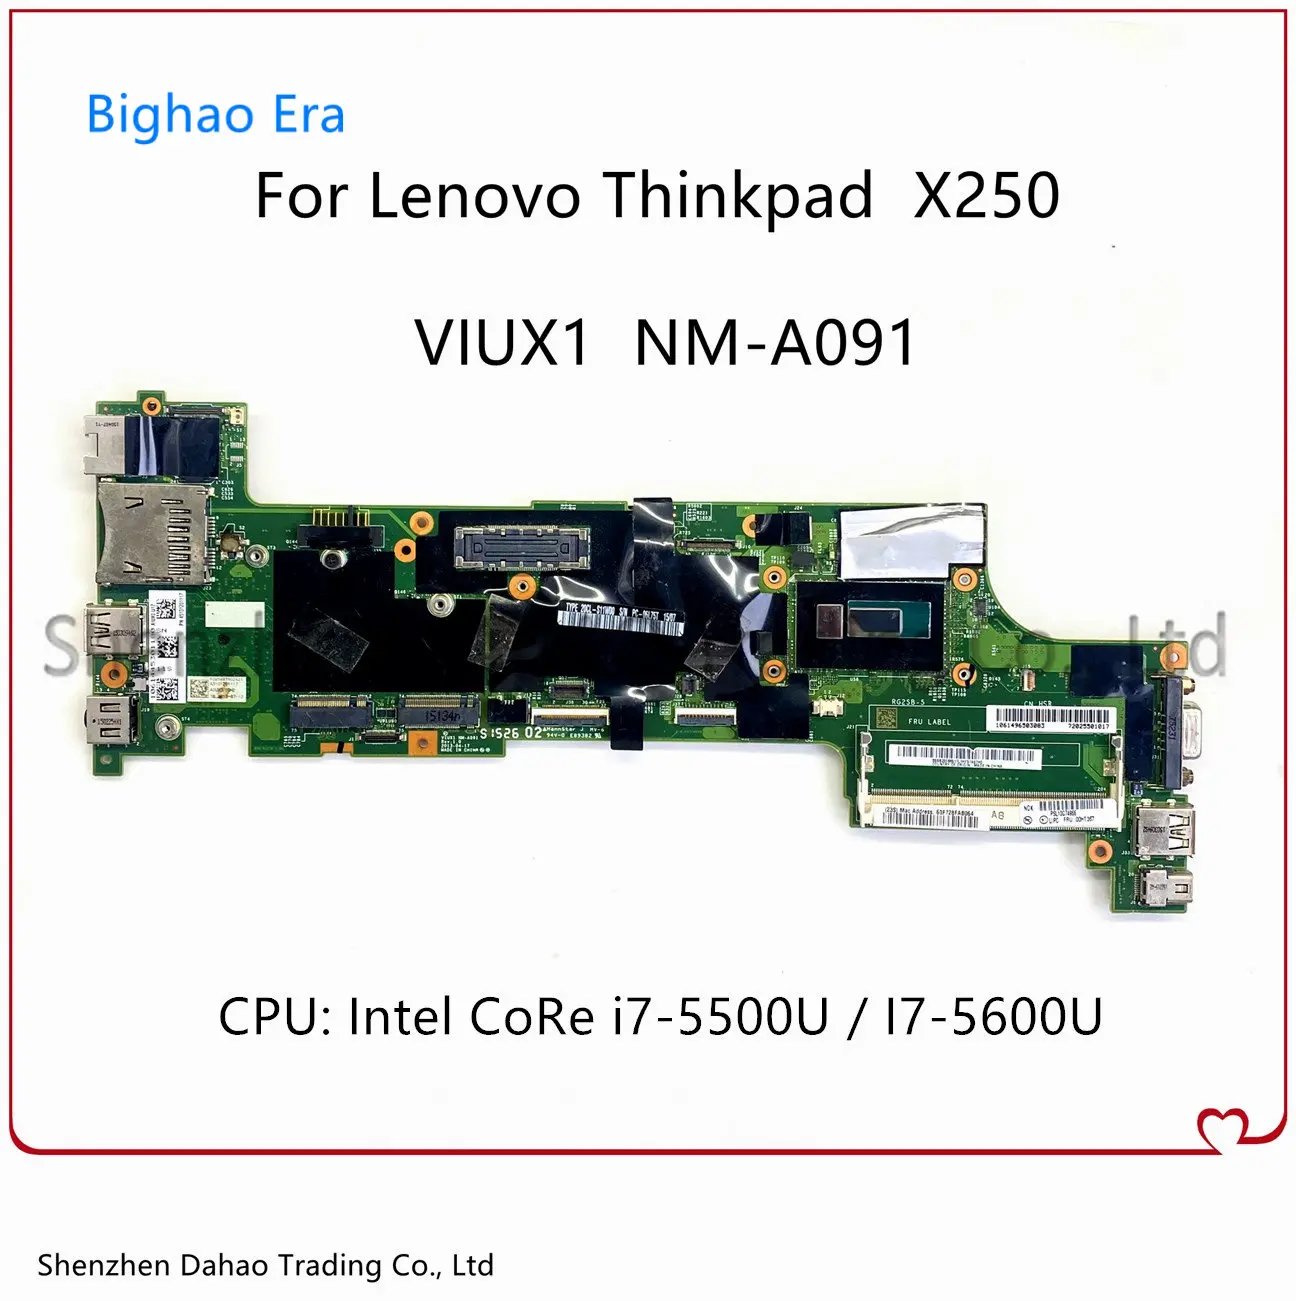 

Материнская плата VIUX1 для ноутбука Lenovo Thinkpad X250 с NM-A091/5600U 100%, тестовая работа FRU 00HT376 00HT383 00HT372 00HT387